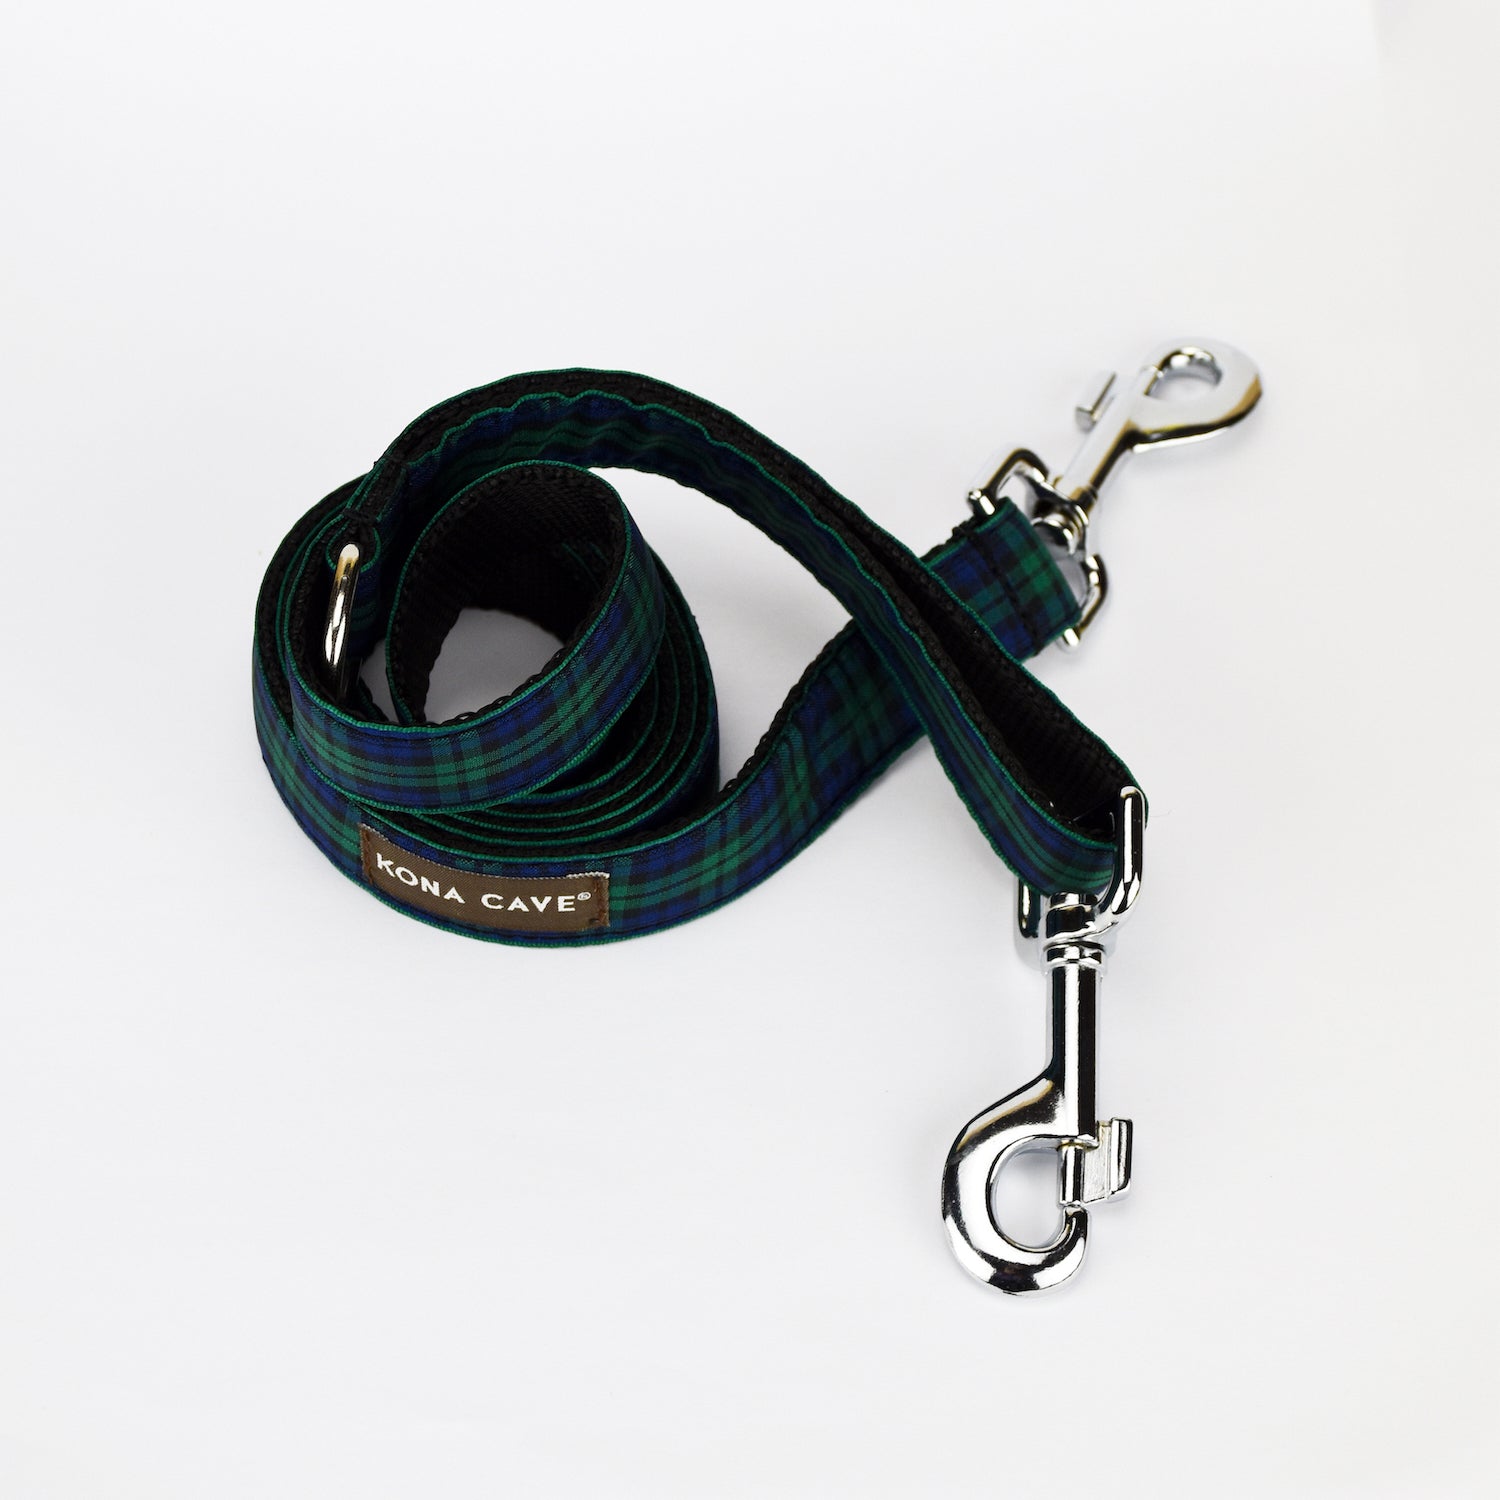 KONA CAVE® Ribbon Dog Collar and Leash in authentic Blackwatch Tartan. Adjustable dog leash in nylon and ribbon. 